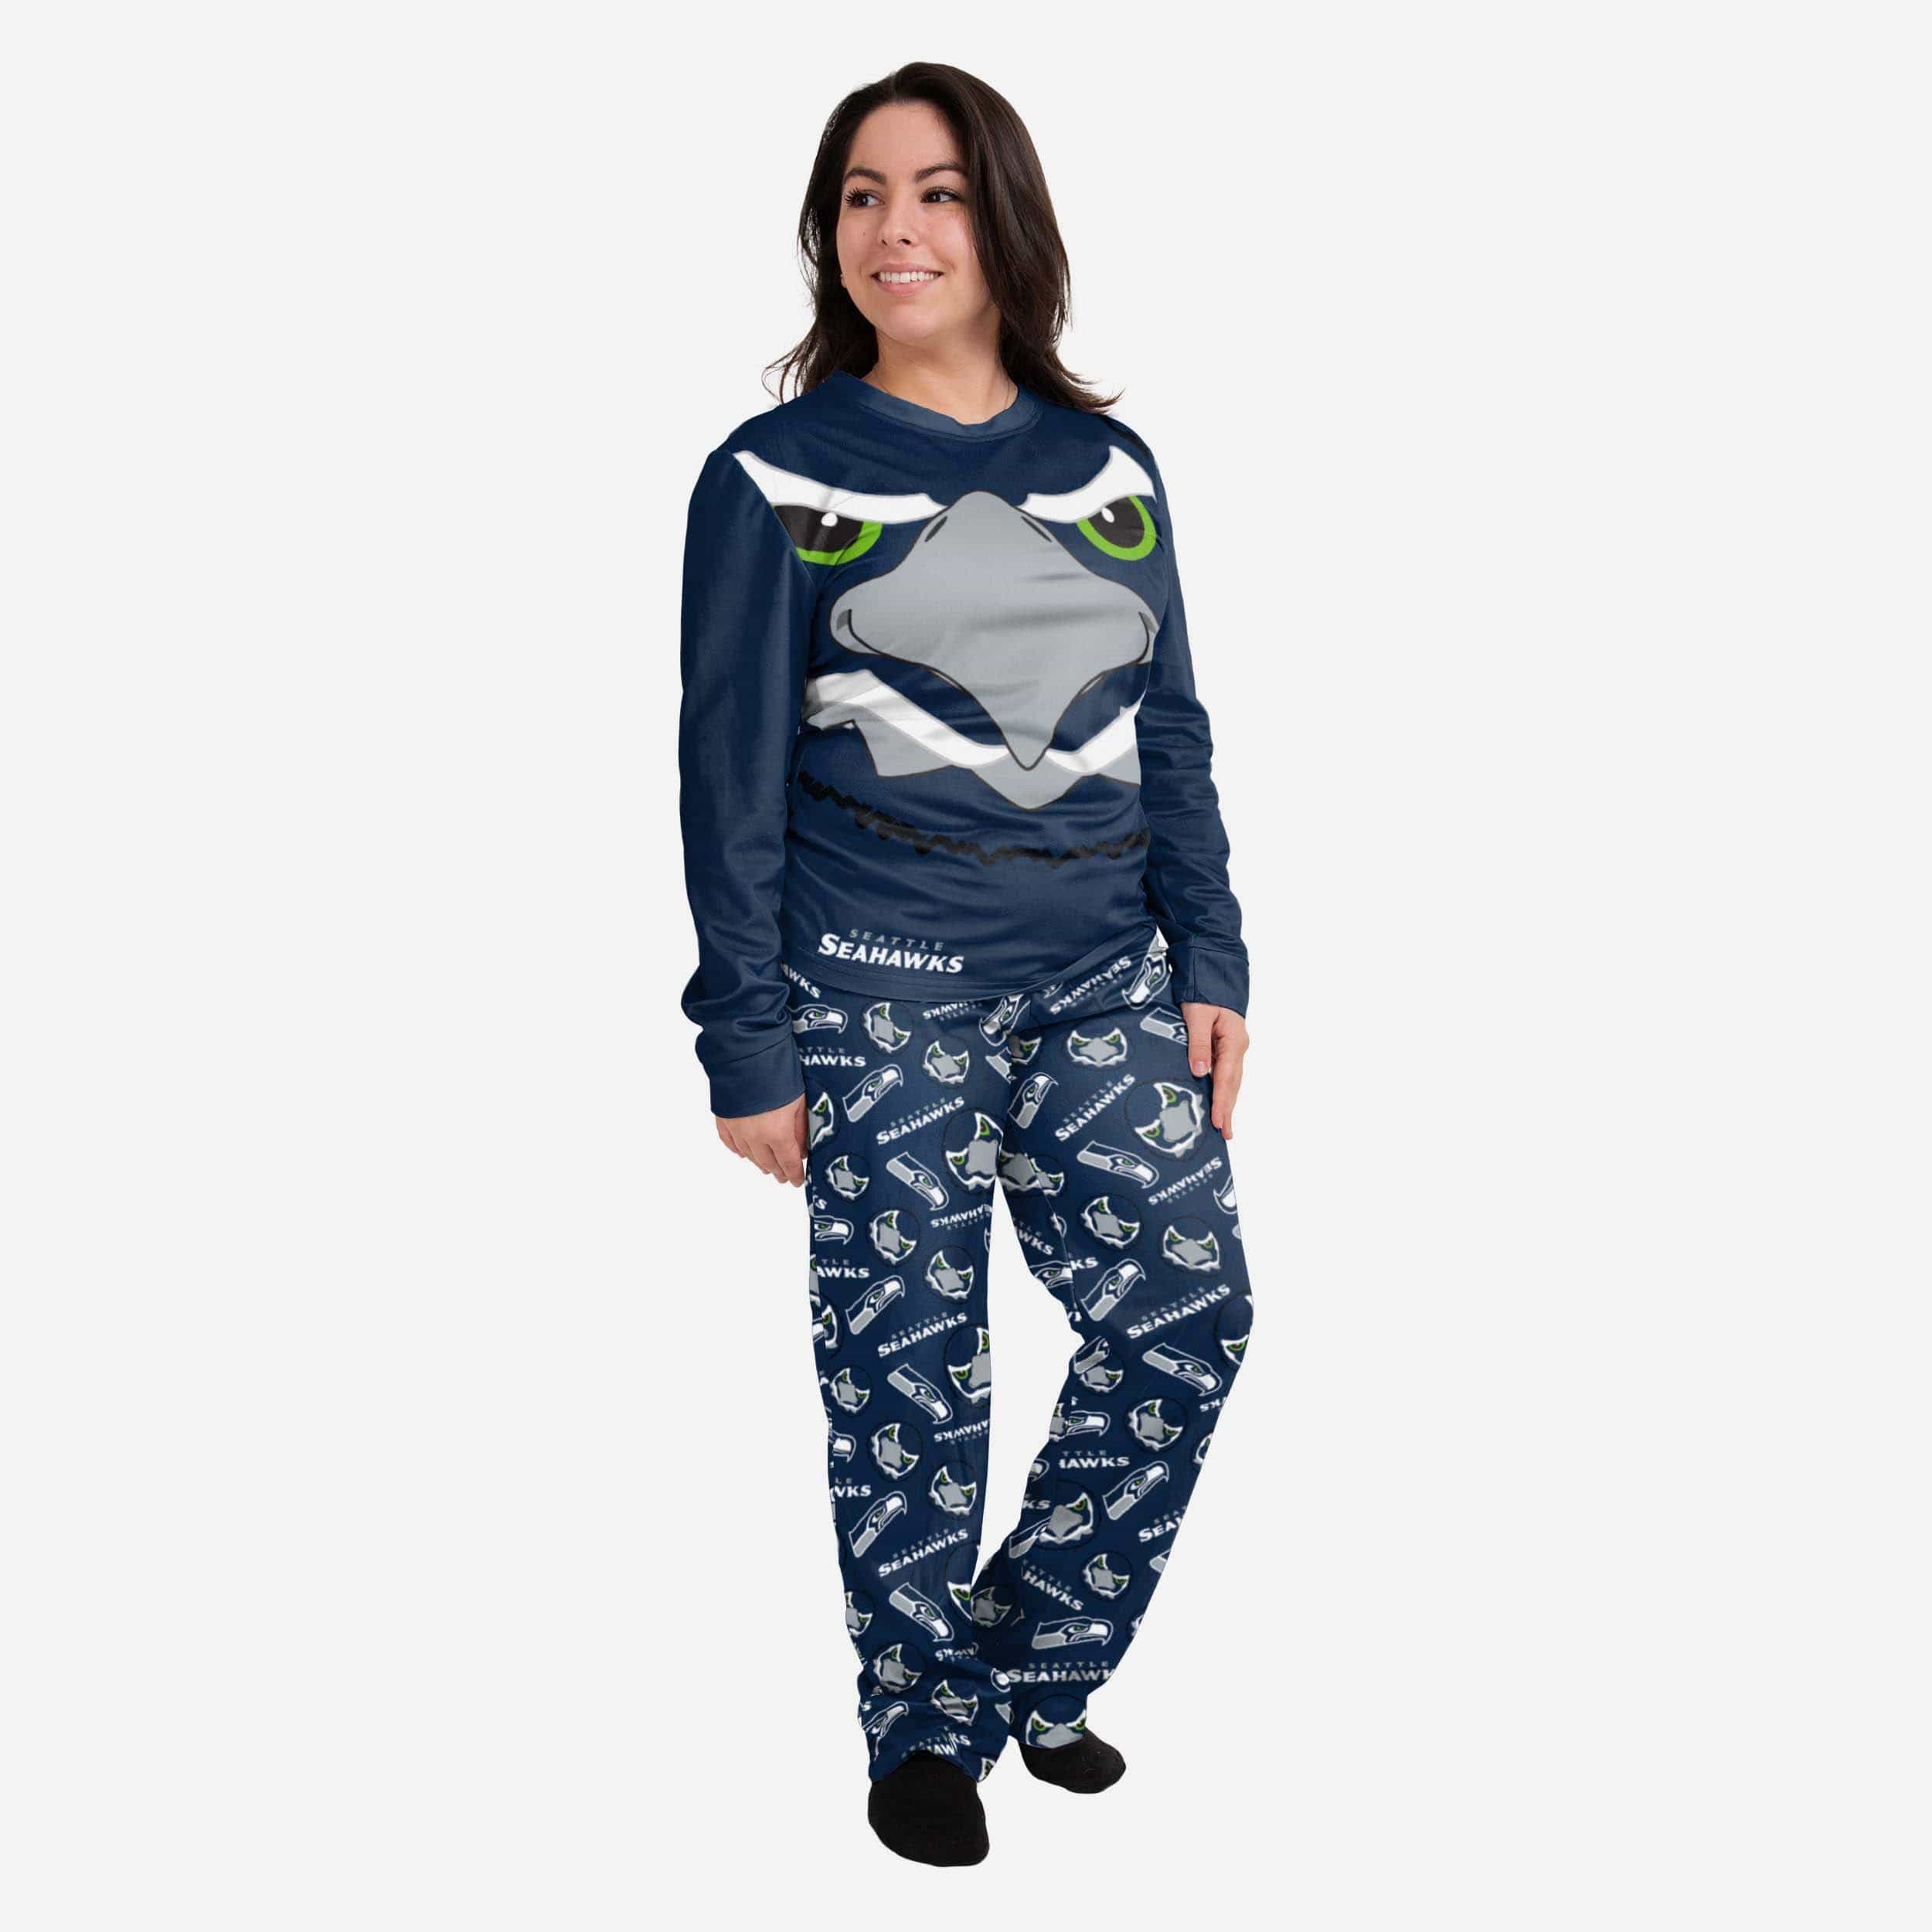 Seattle Seahawks NFL Womens Blitz Mascot Pajamas